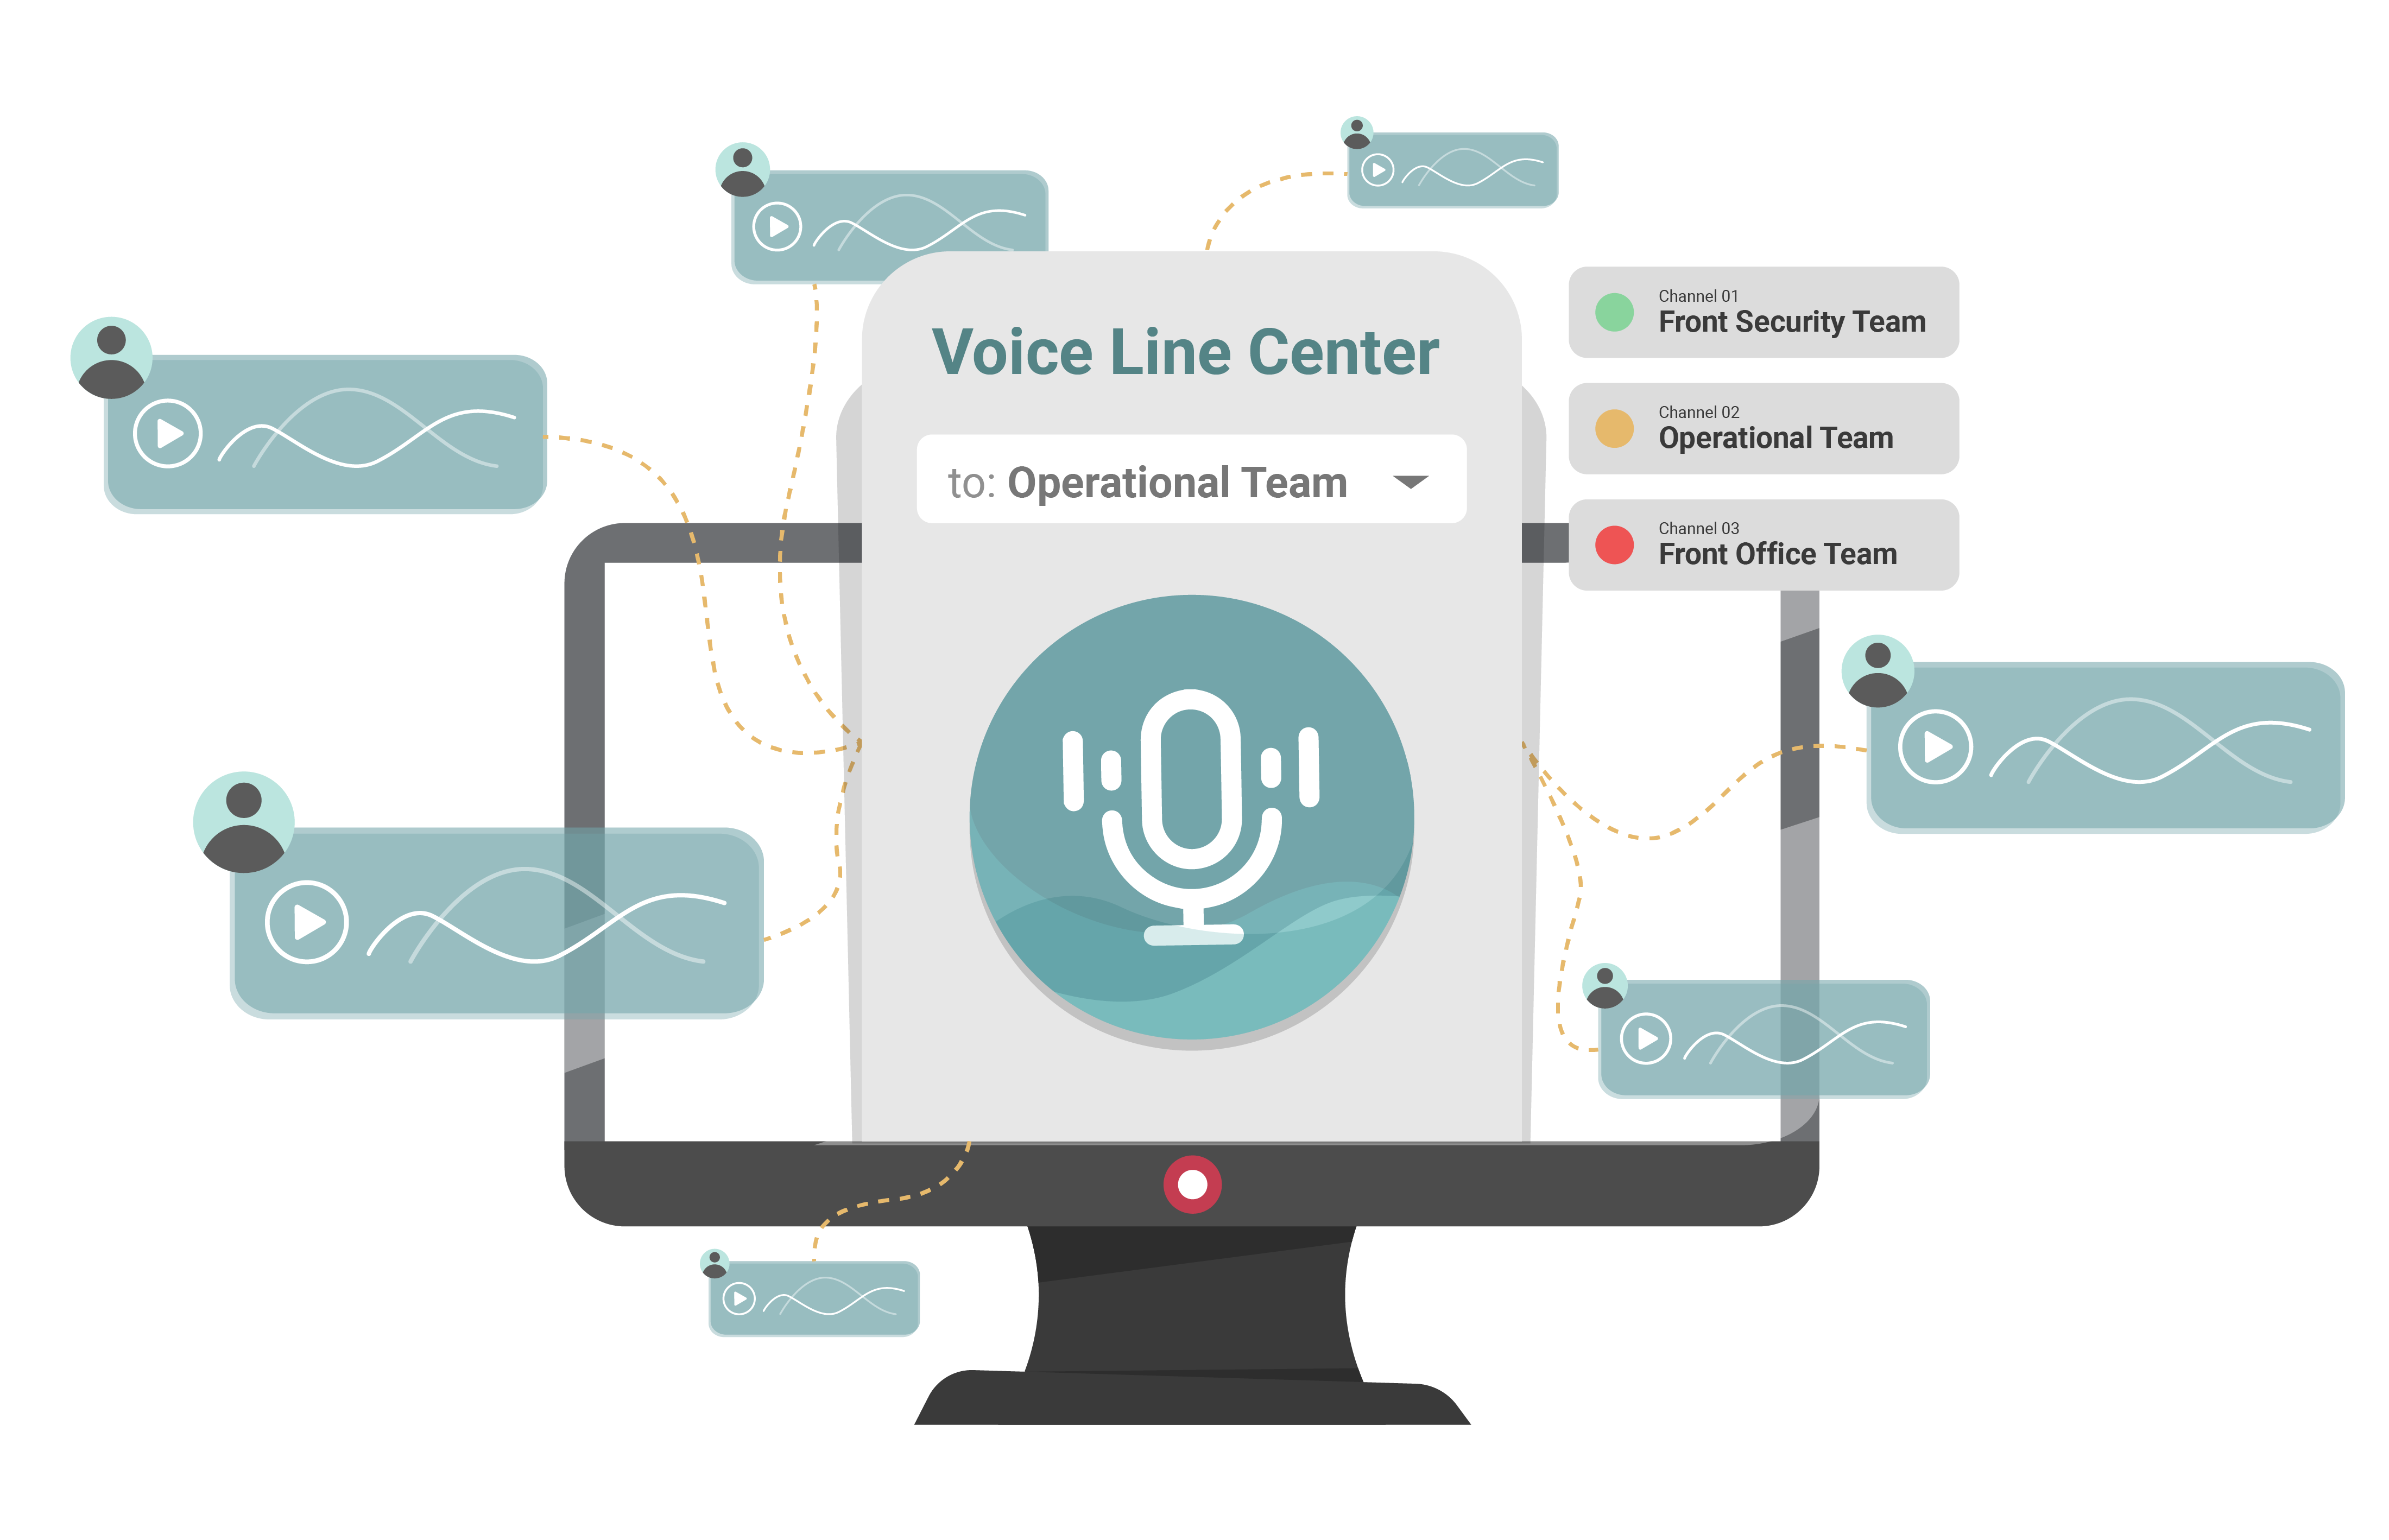 Voice Line Center